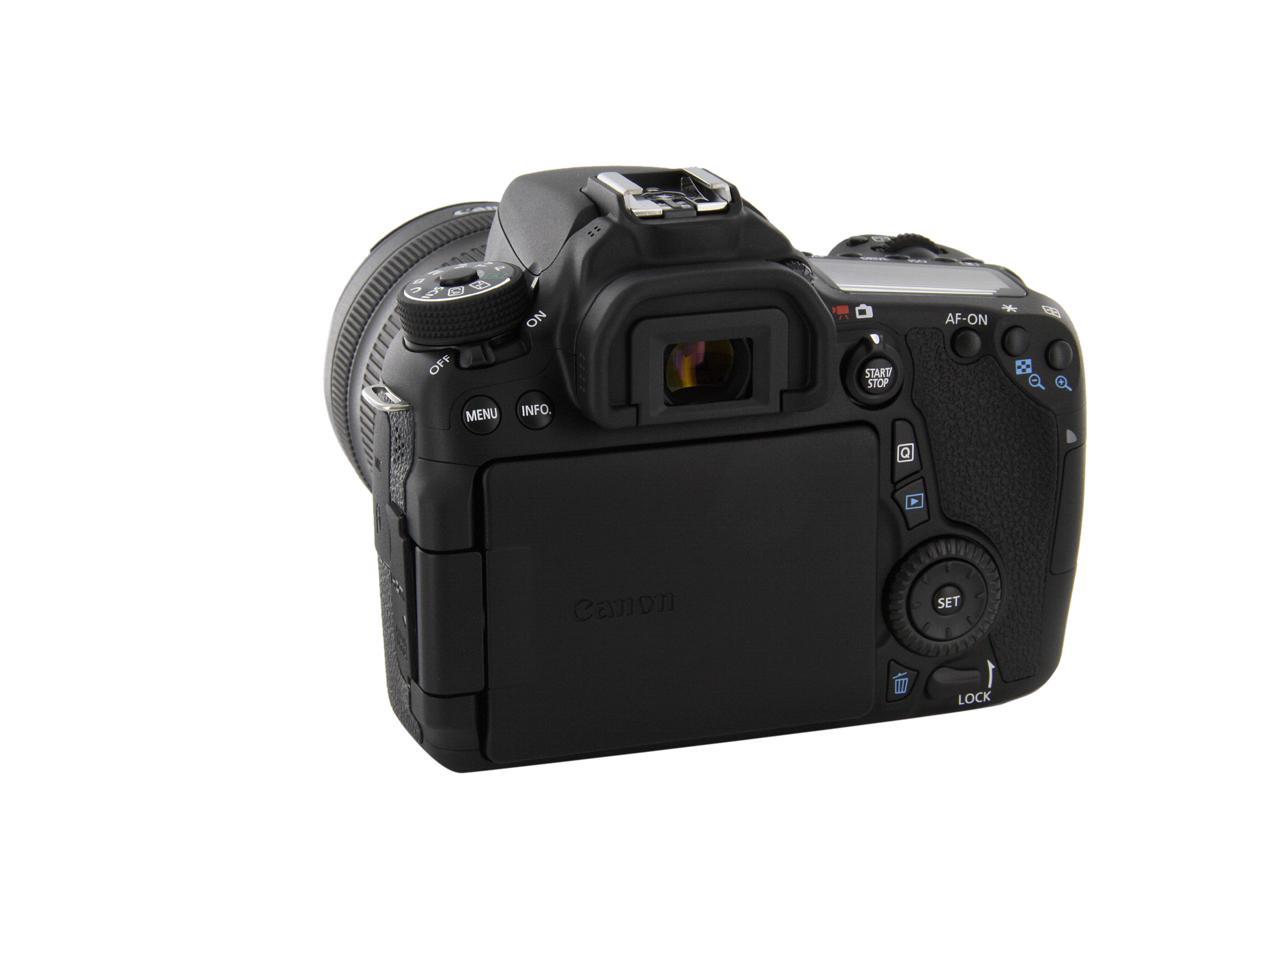 Open Box: Canon EOS 70D (8469B016) Digital SLR Cameras Black 